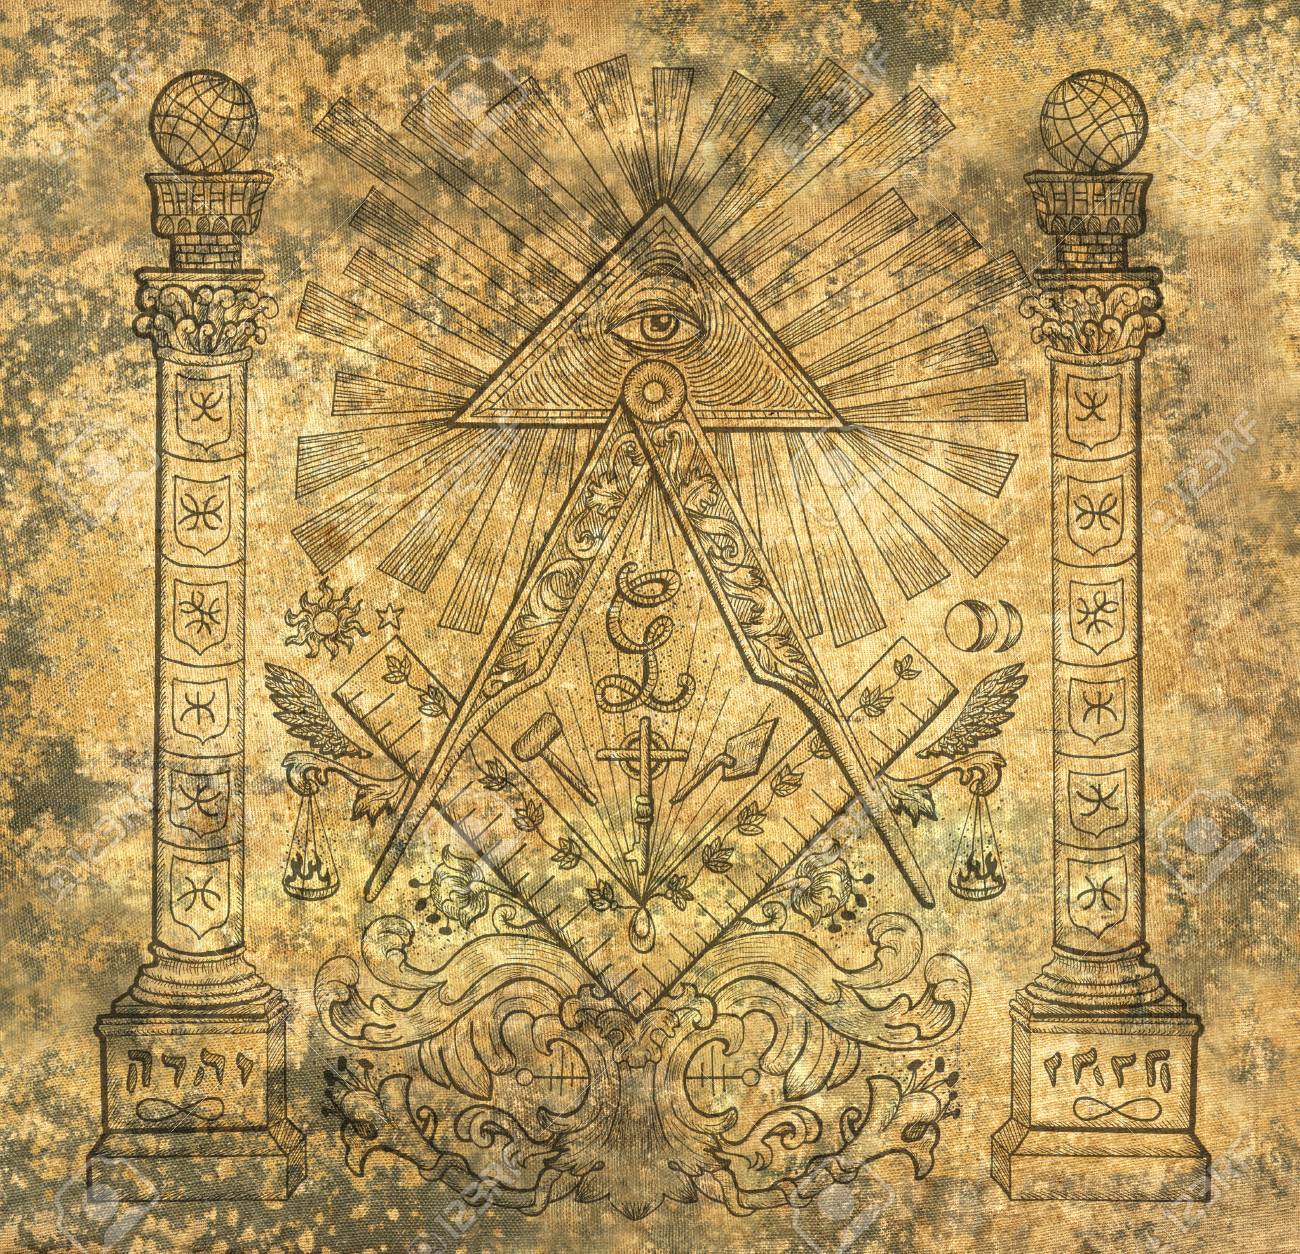 Scrapbook Design Background With Mason Religious Symbols